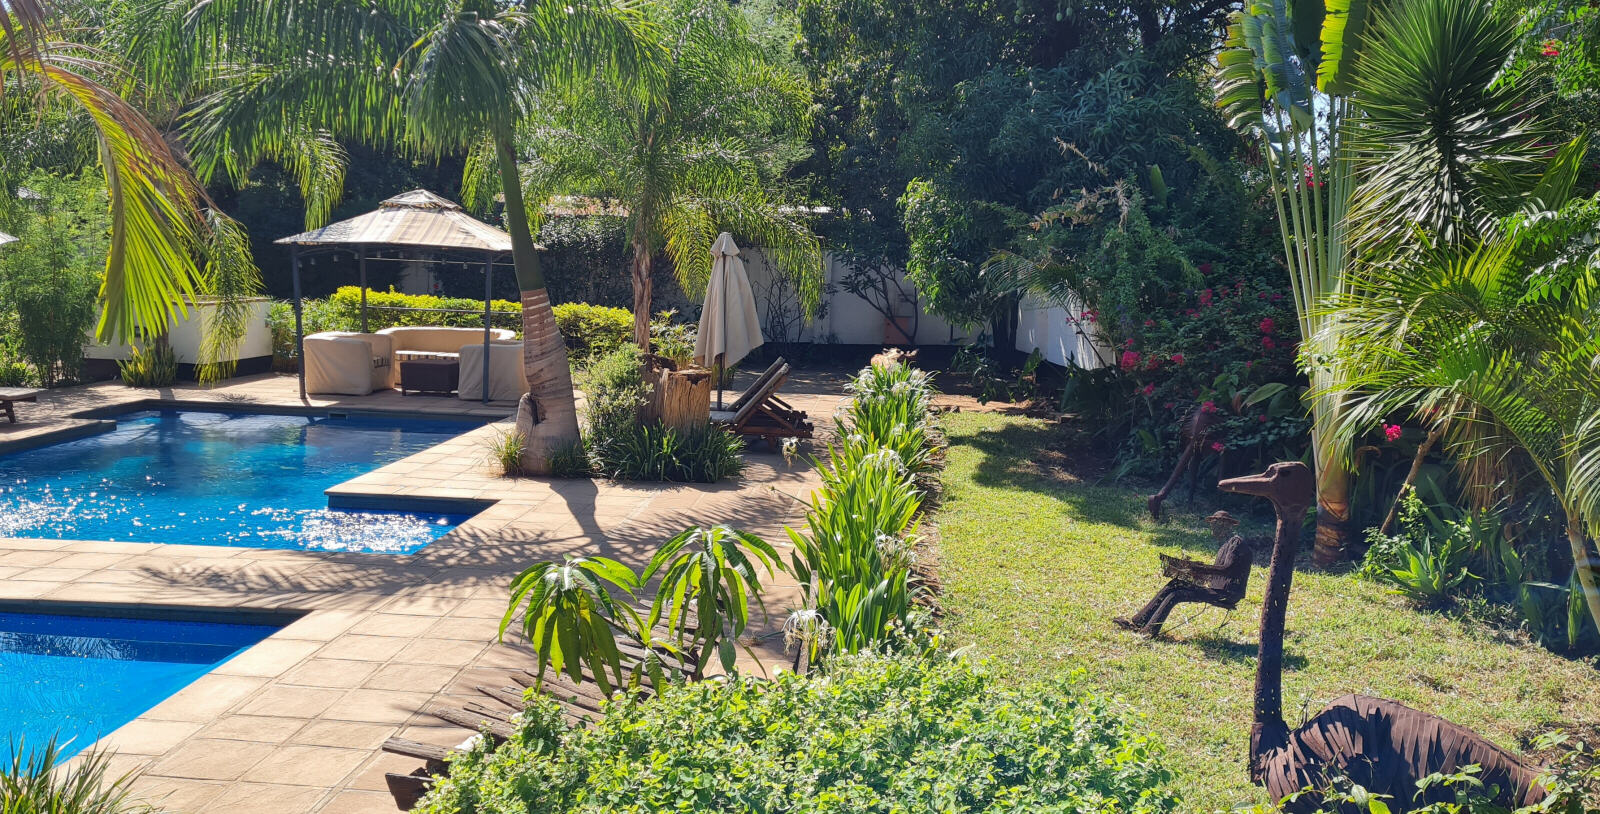 The pool at Ngoma Zanga lodge, Livingstone